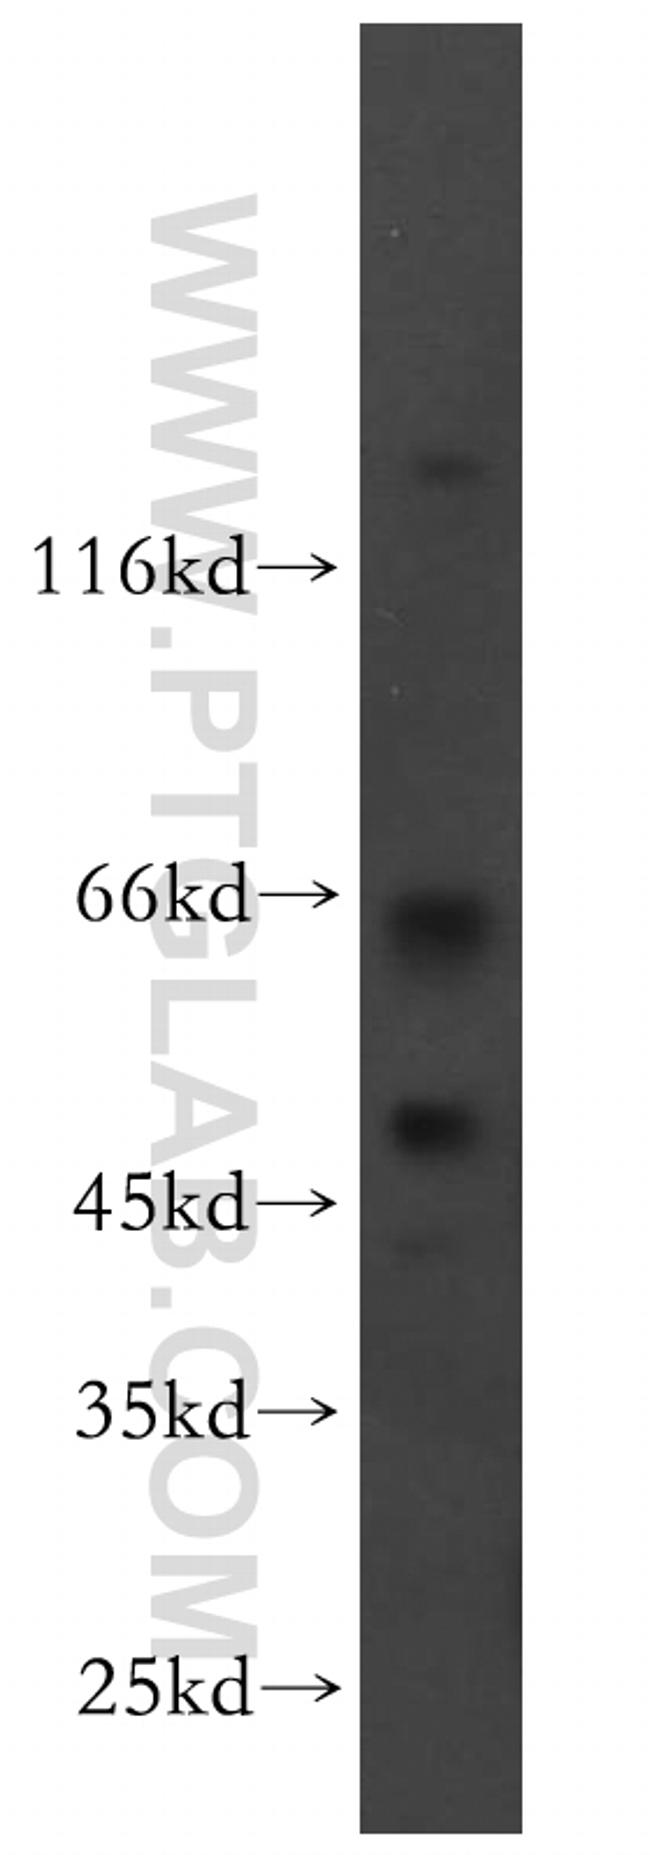 RRP8 Antibody in Western Blot (WB)